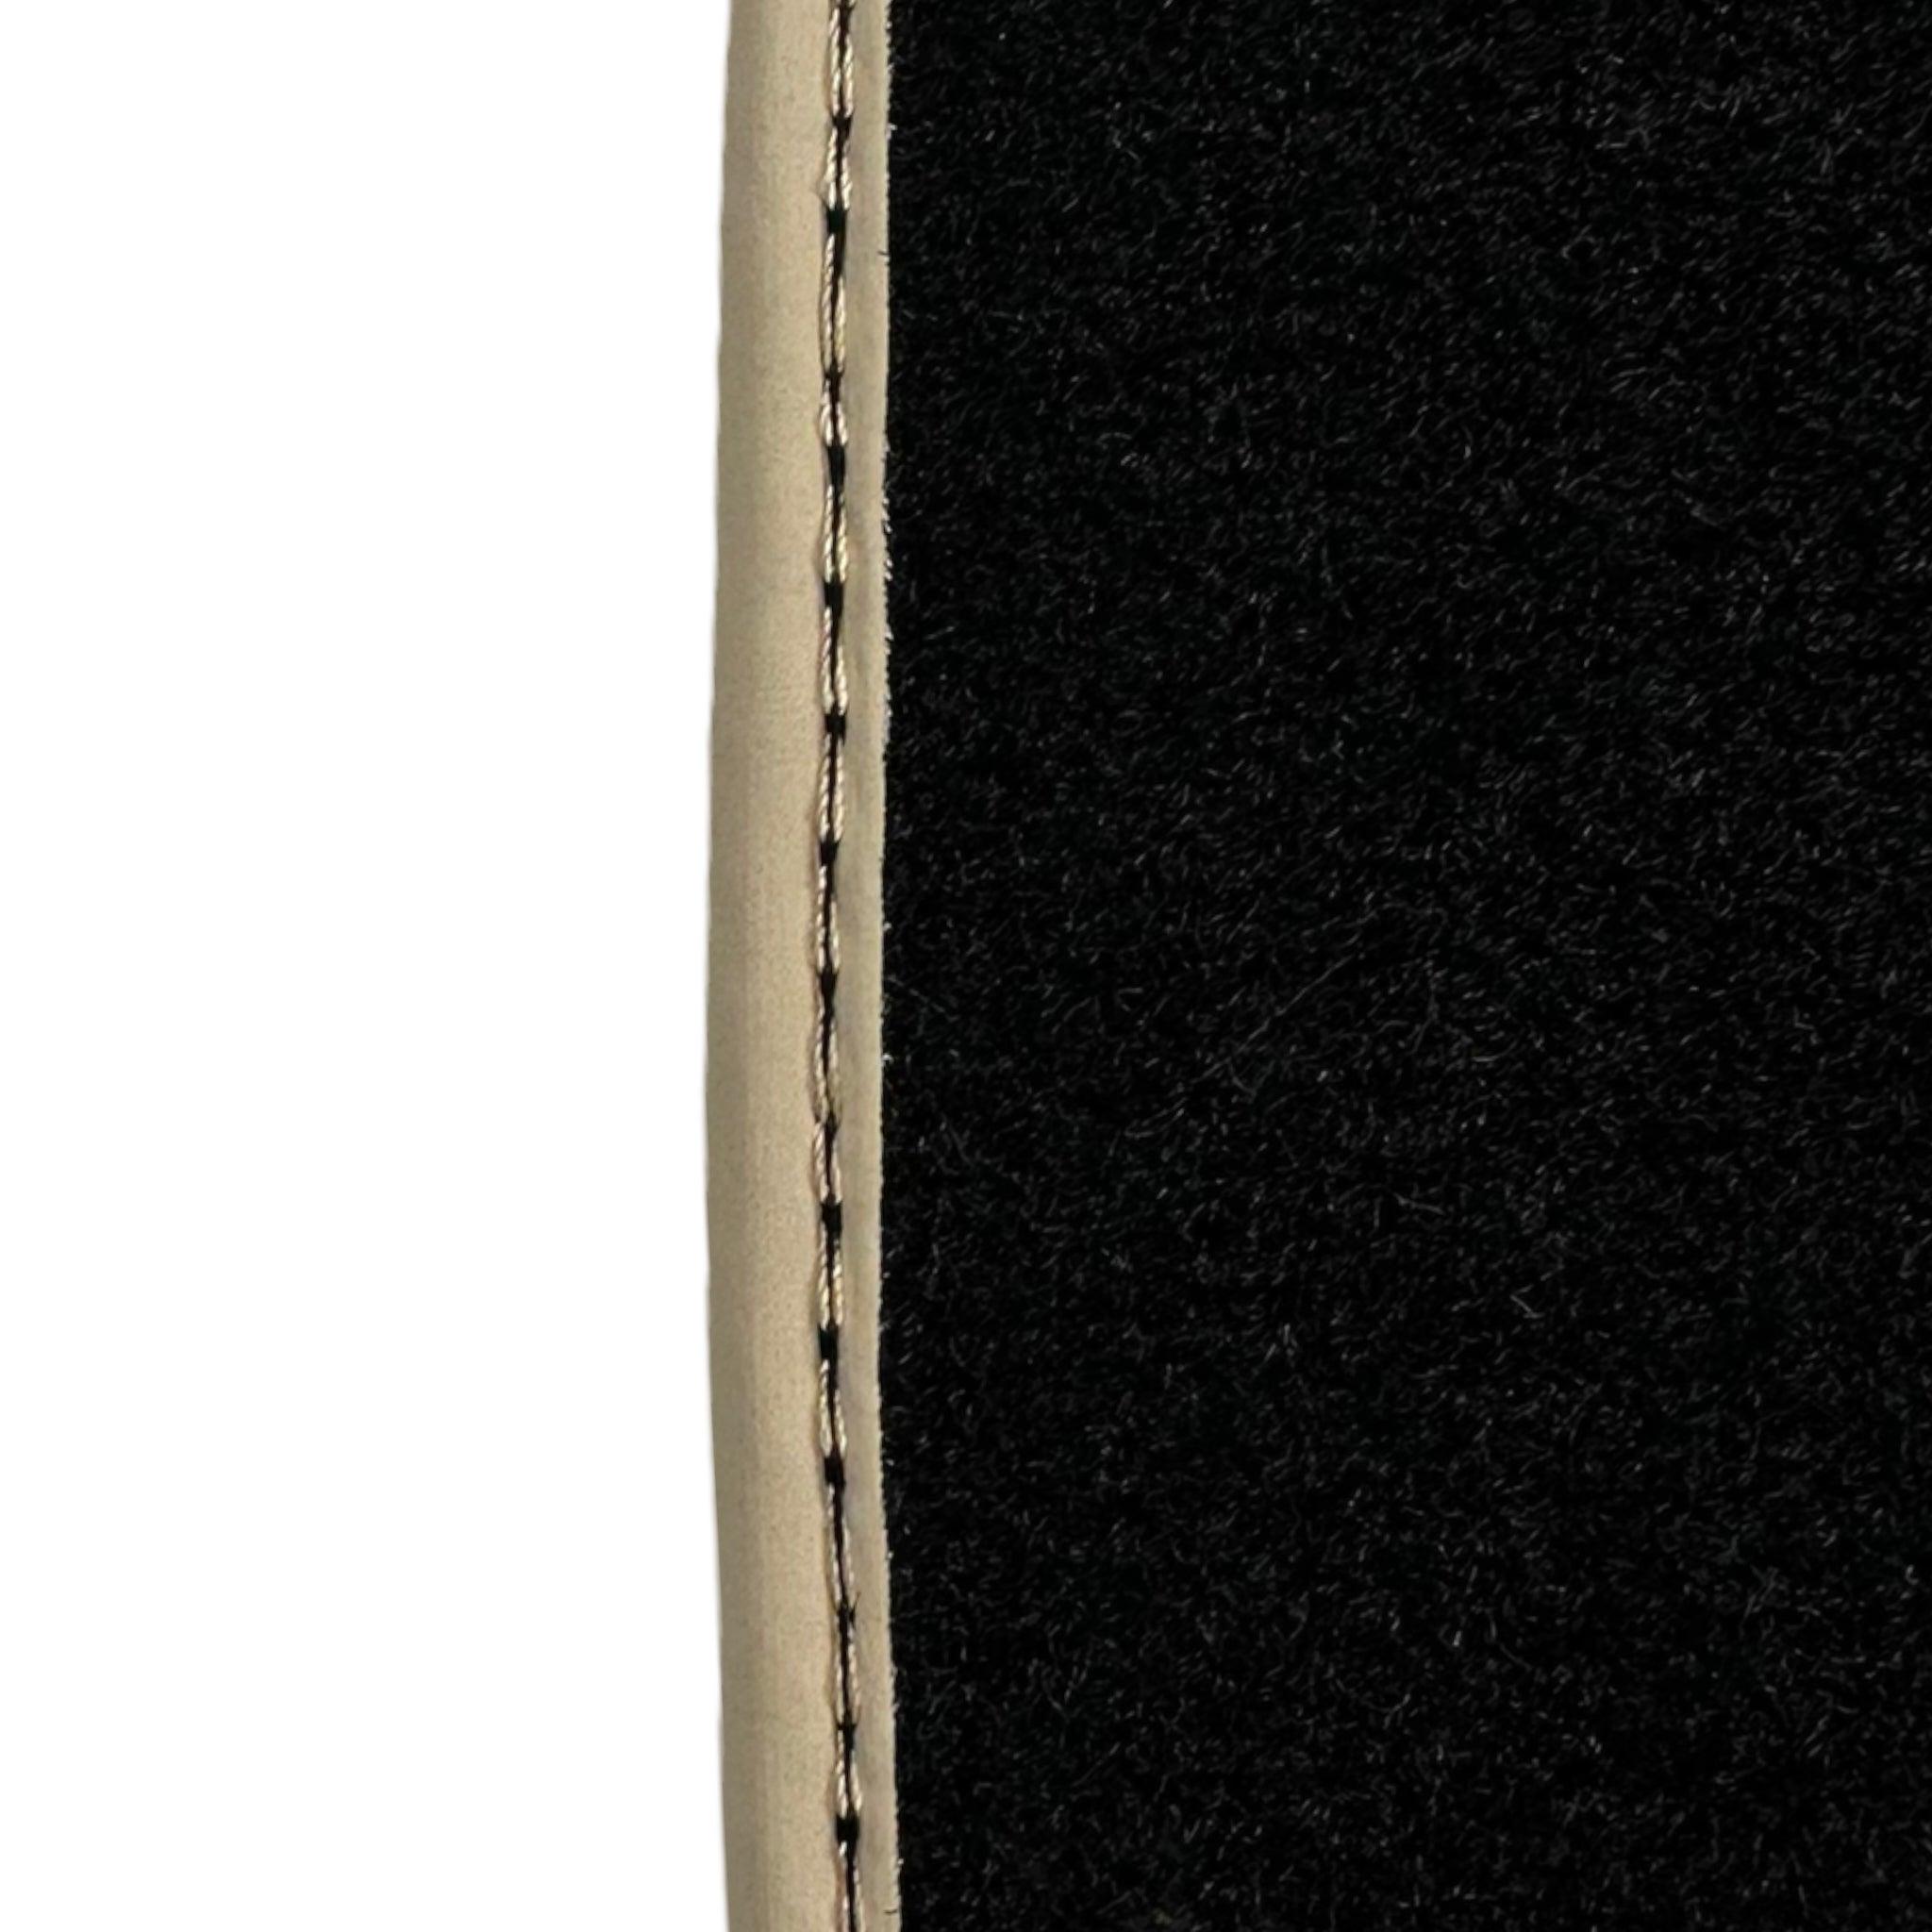 Leather Floor Mats for Ferrari California T (2008-2014) Black Sewing ER56 Design | Beige Trim